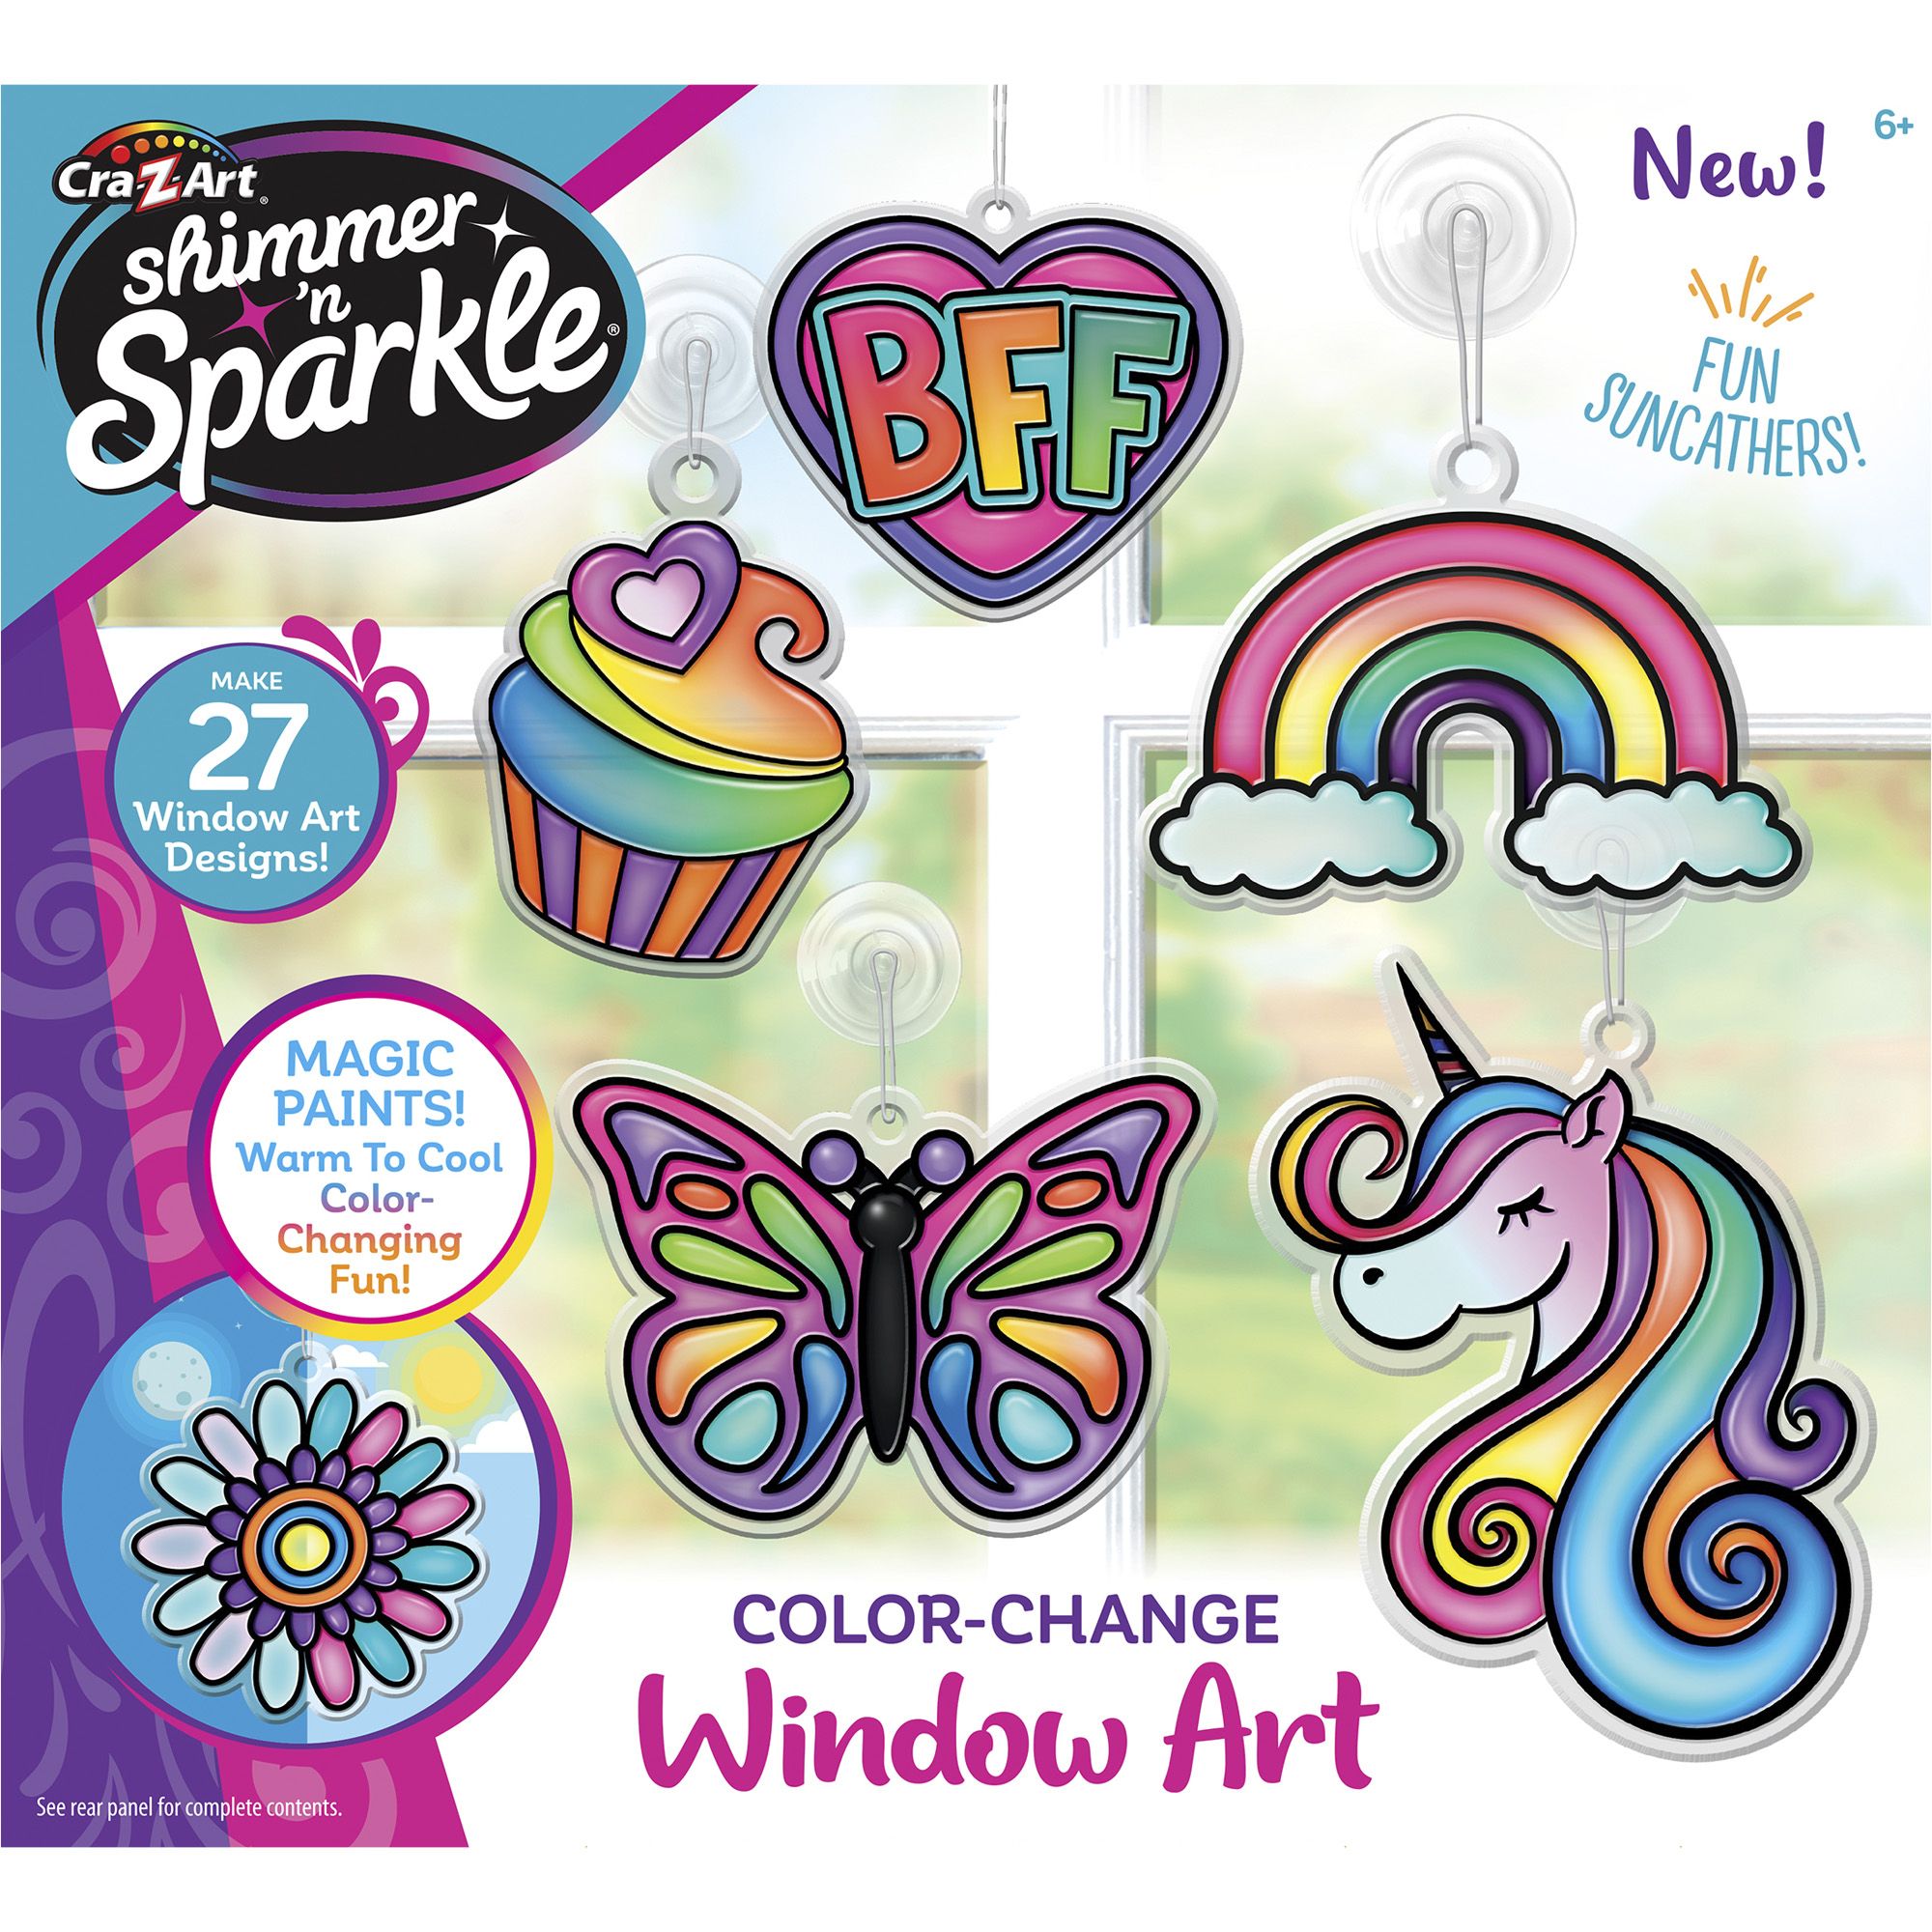 Create Your Own Window Art Craft Kit